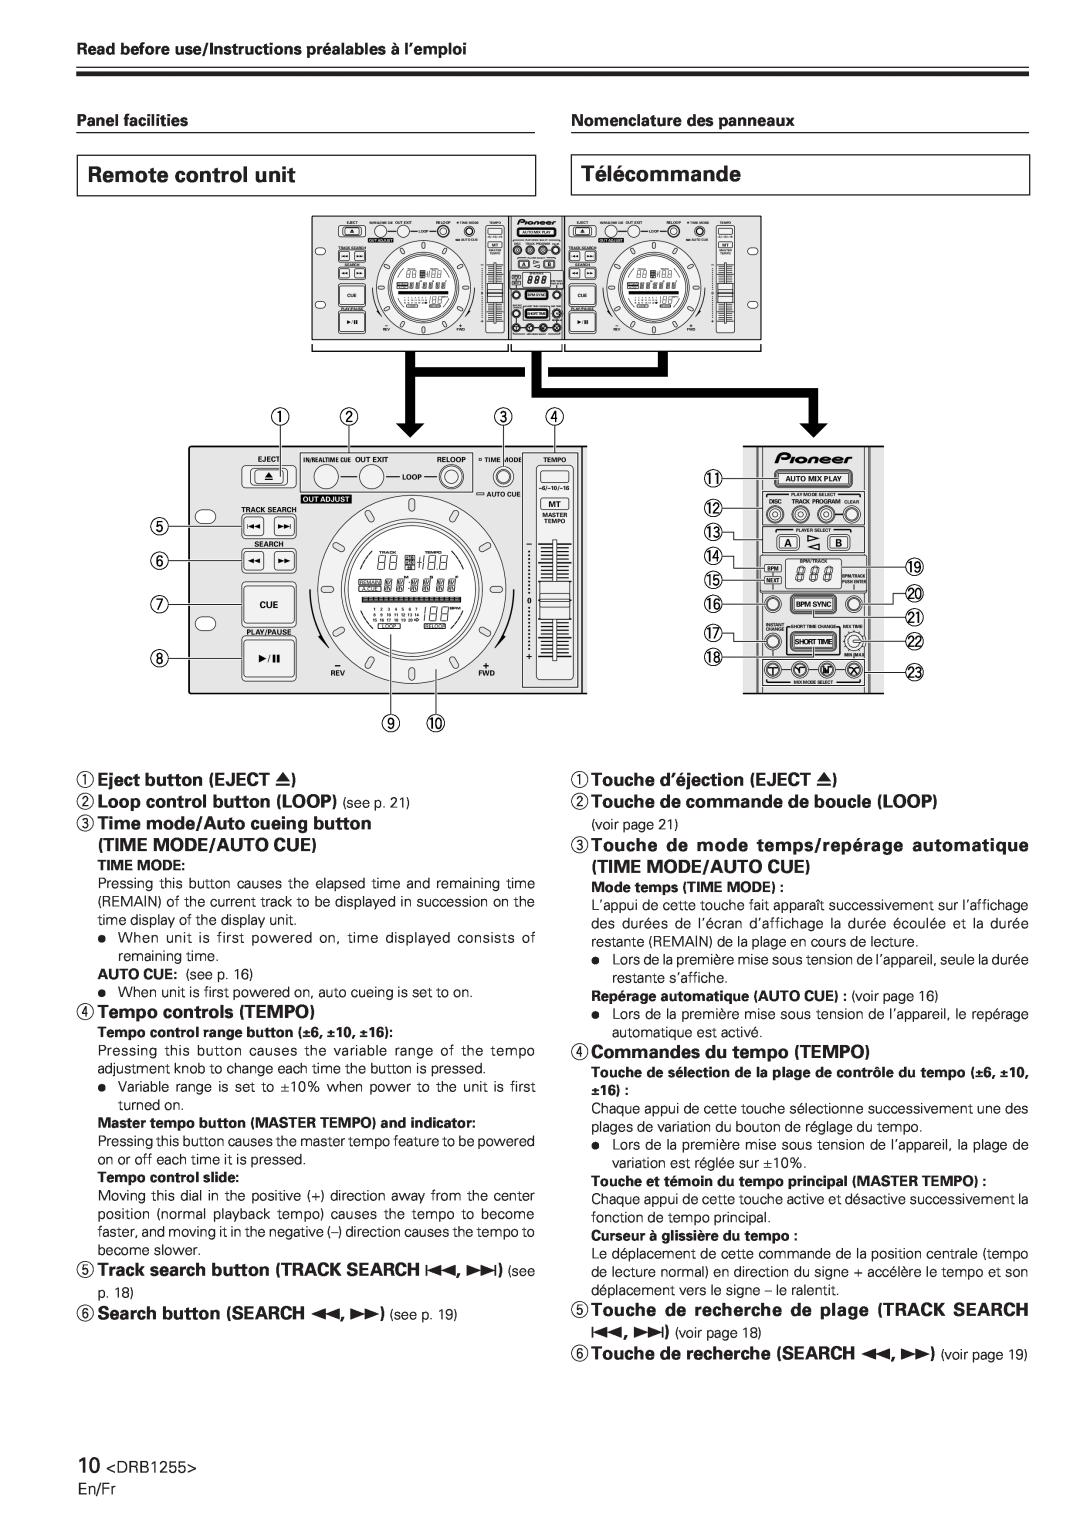 Pioneer CMX-5000 manual Remote control unit, Télécommande 